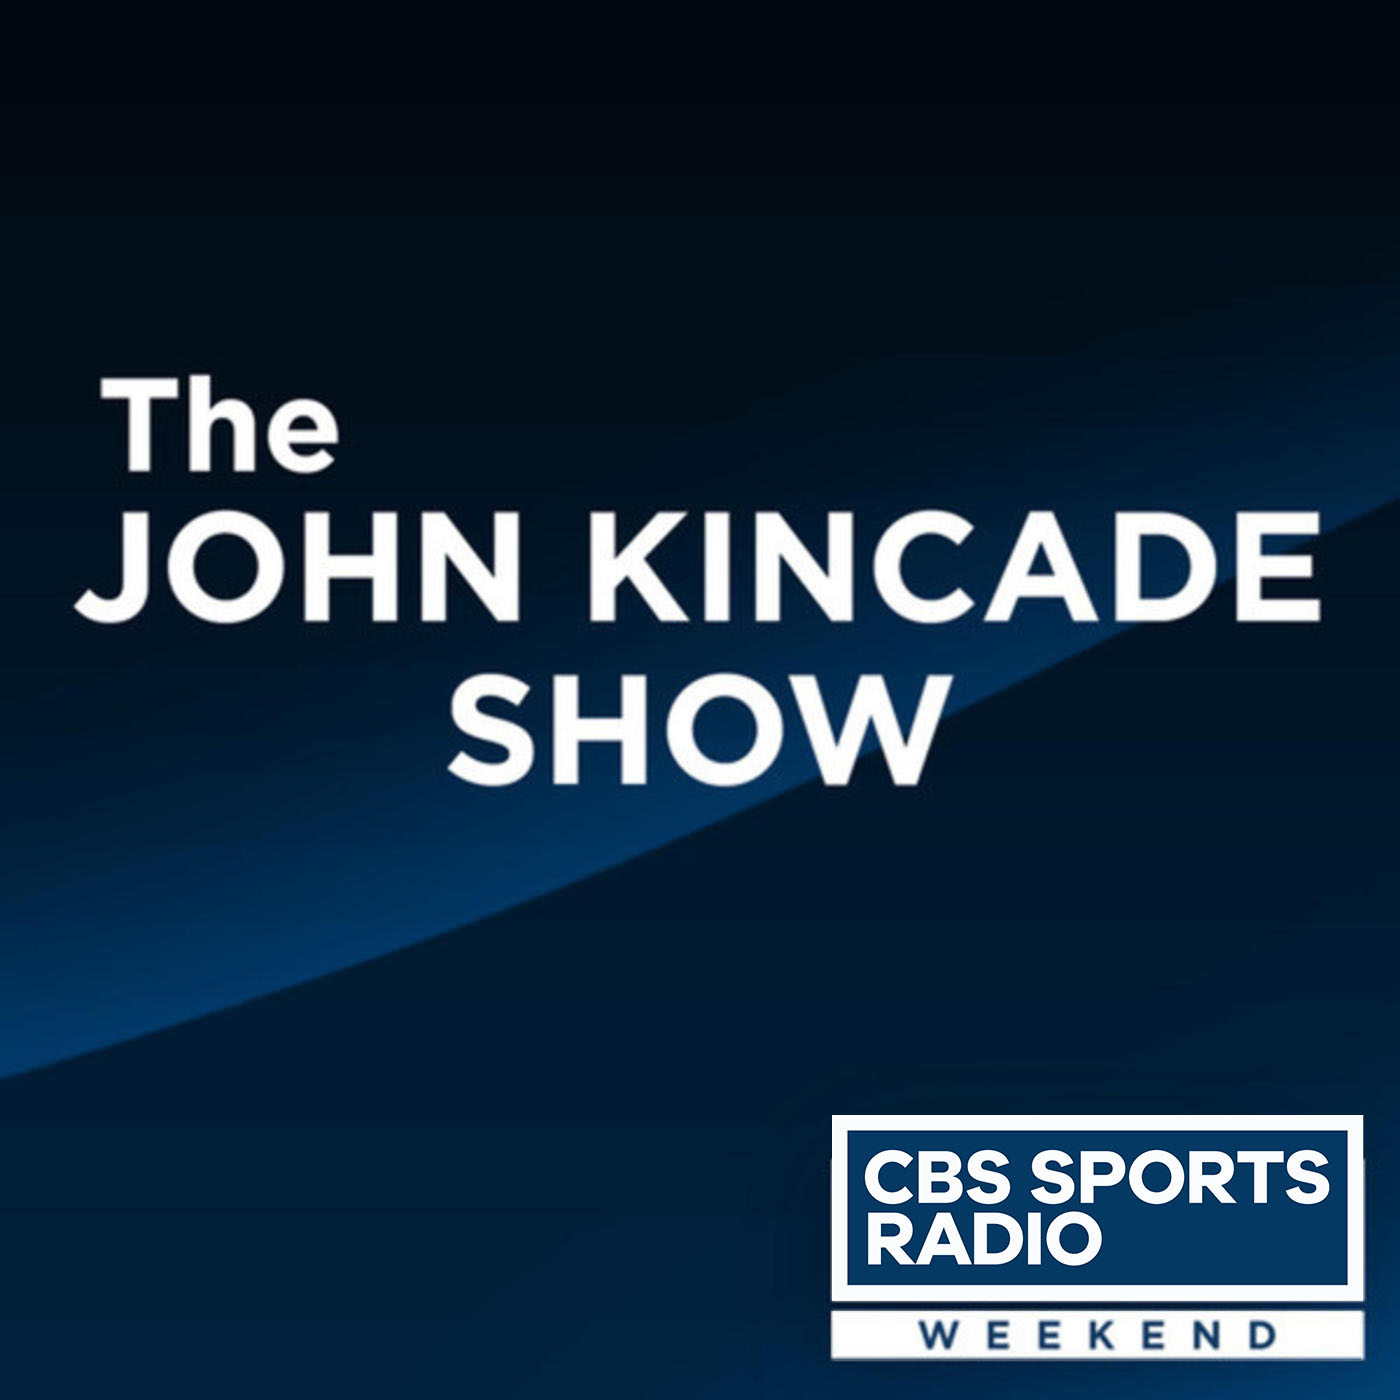 THE JOHN KINCADE SHOW- JERRY PALM, CBS SPORTS